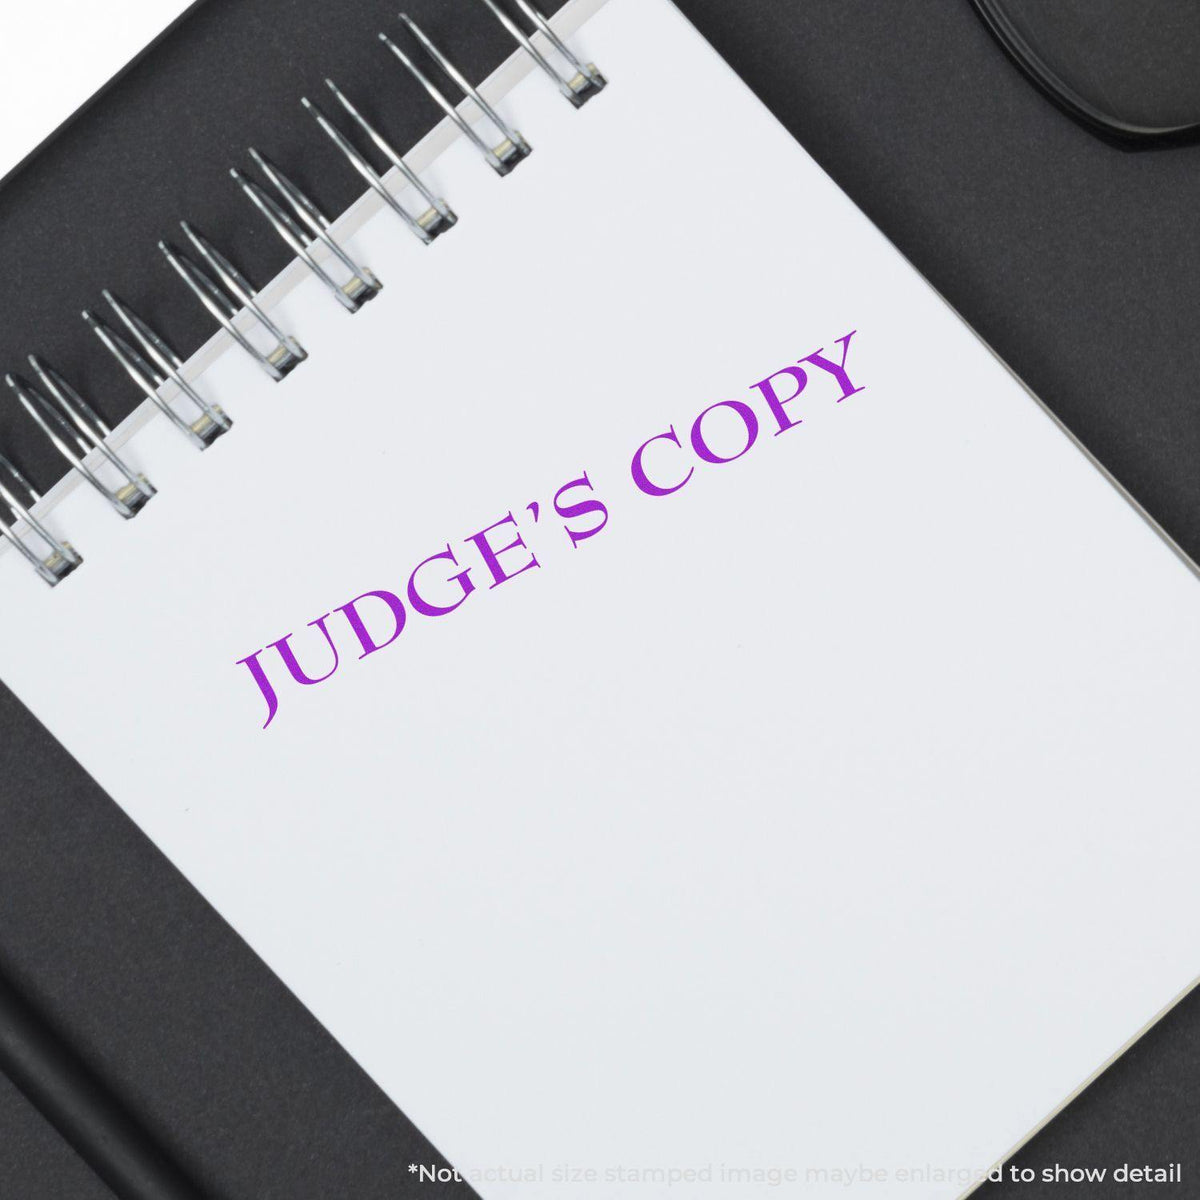 Judges Copy Legal Rubber Stamp Lifestyle Photo